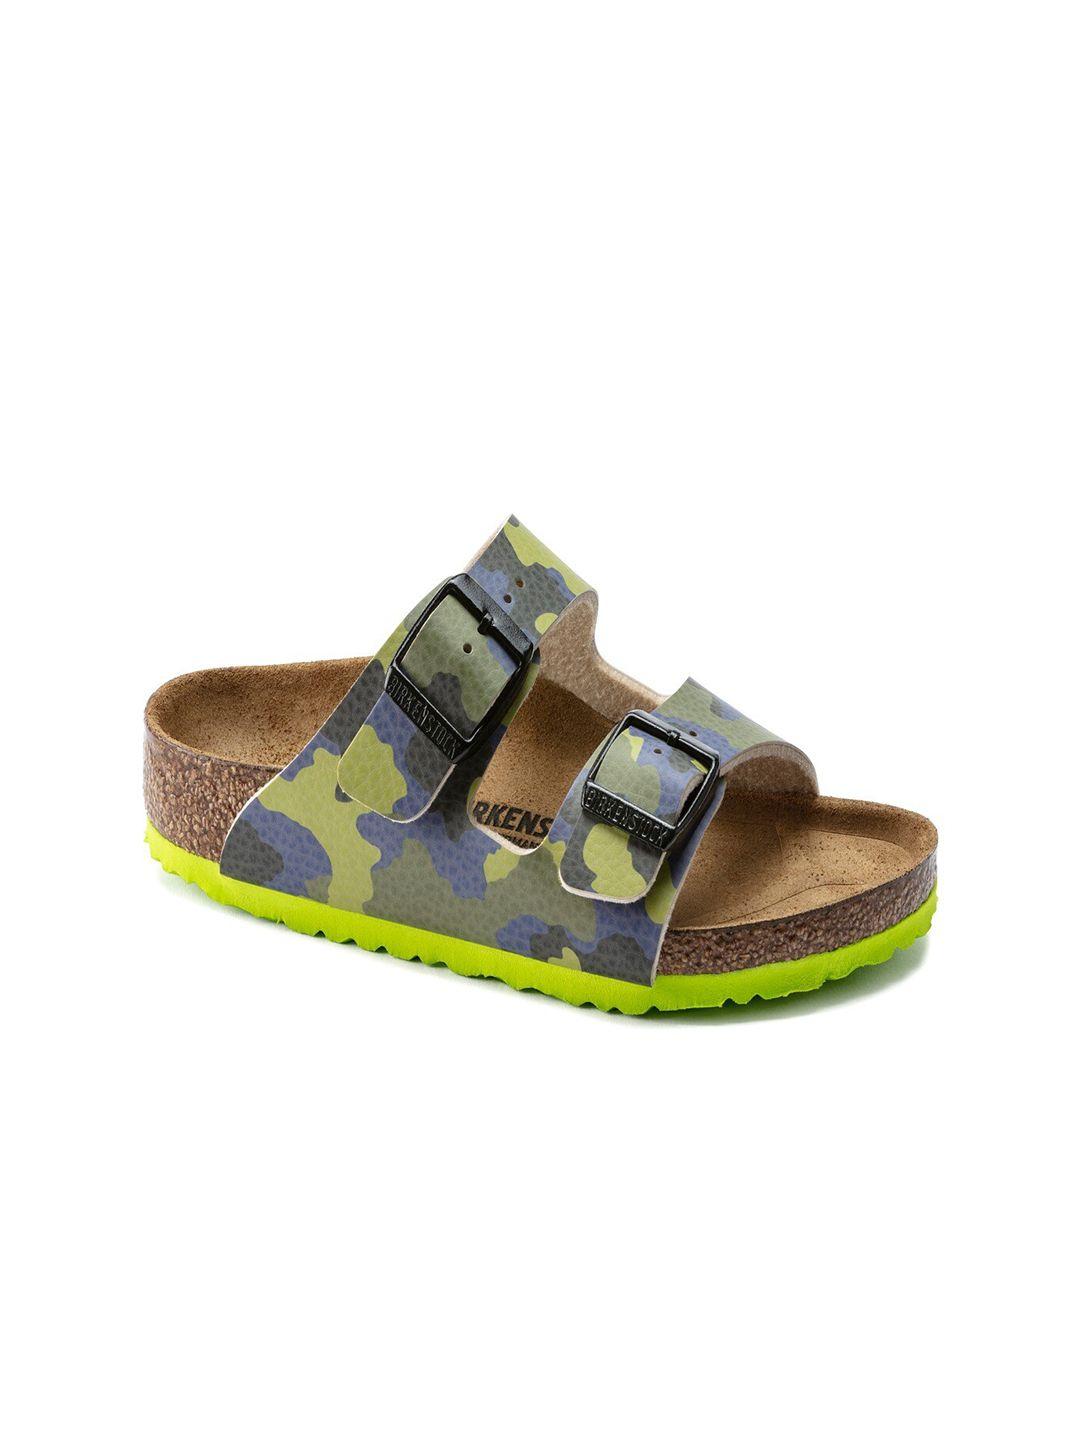 birkenstock boys narrow width multicoloured printed arizona slip on comfort sandals